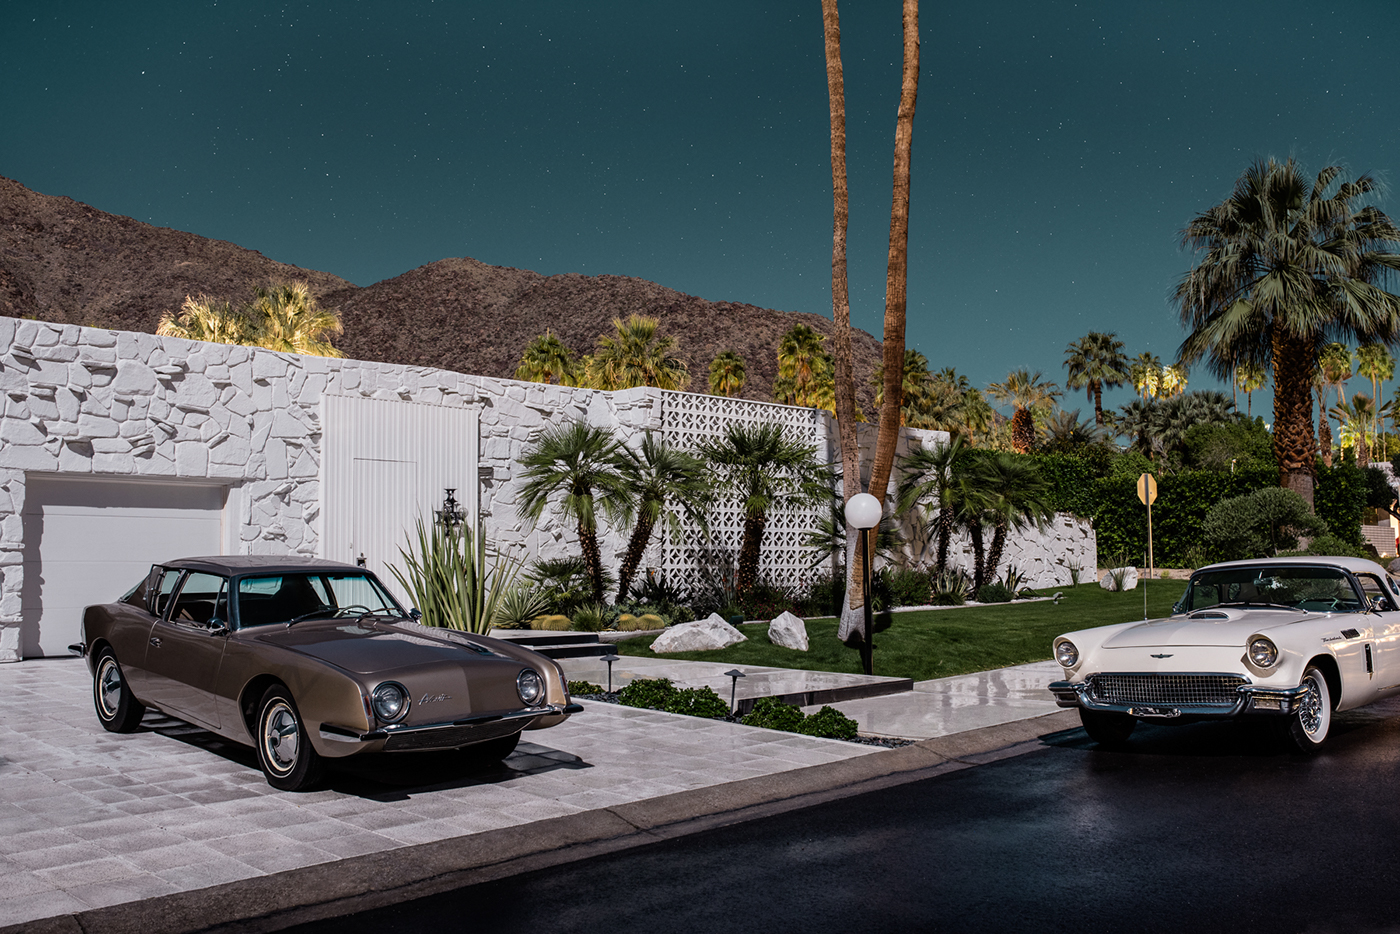 Tom blachford blachford midnight modern Palm Springs moonlight long exposure California modernism modernist MID-CENTURY